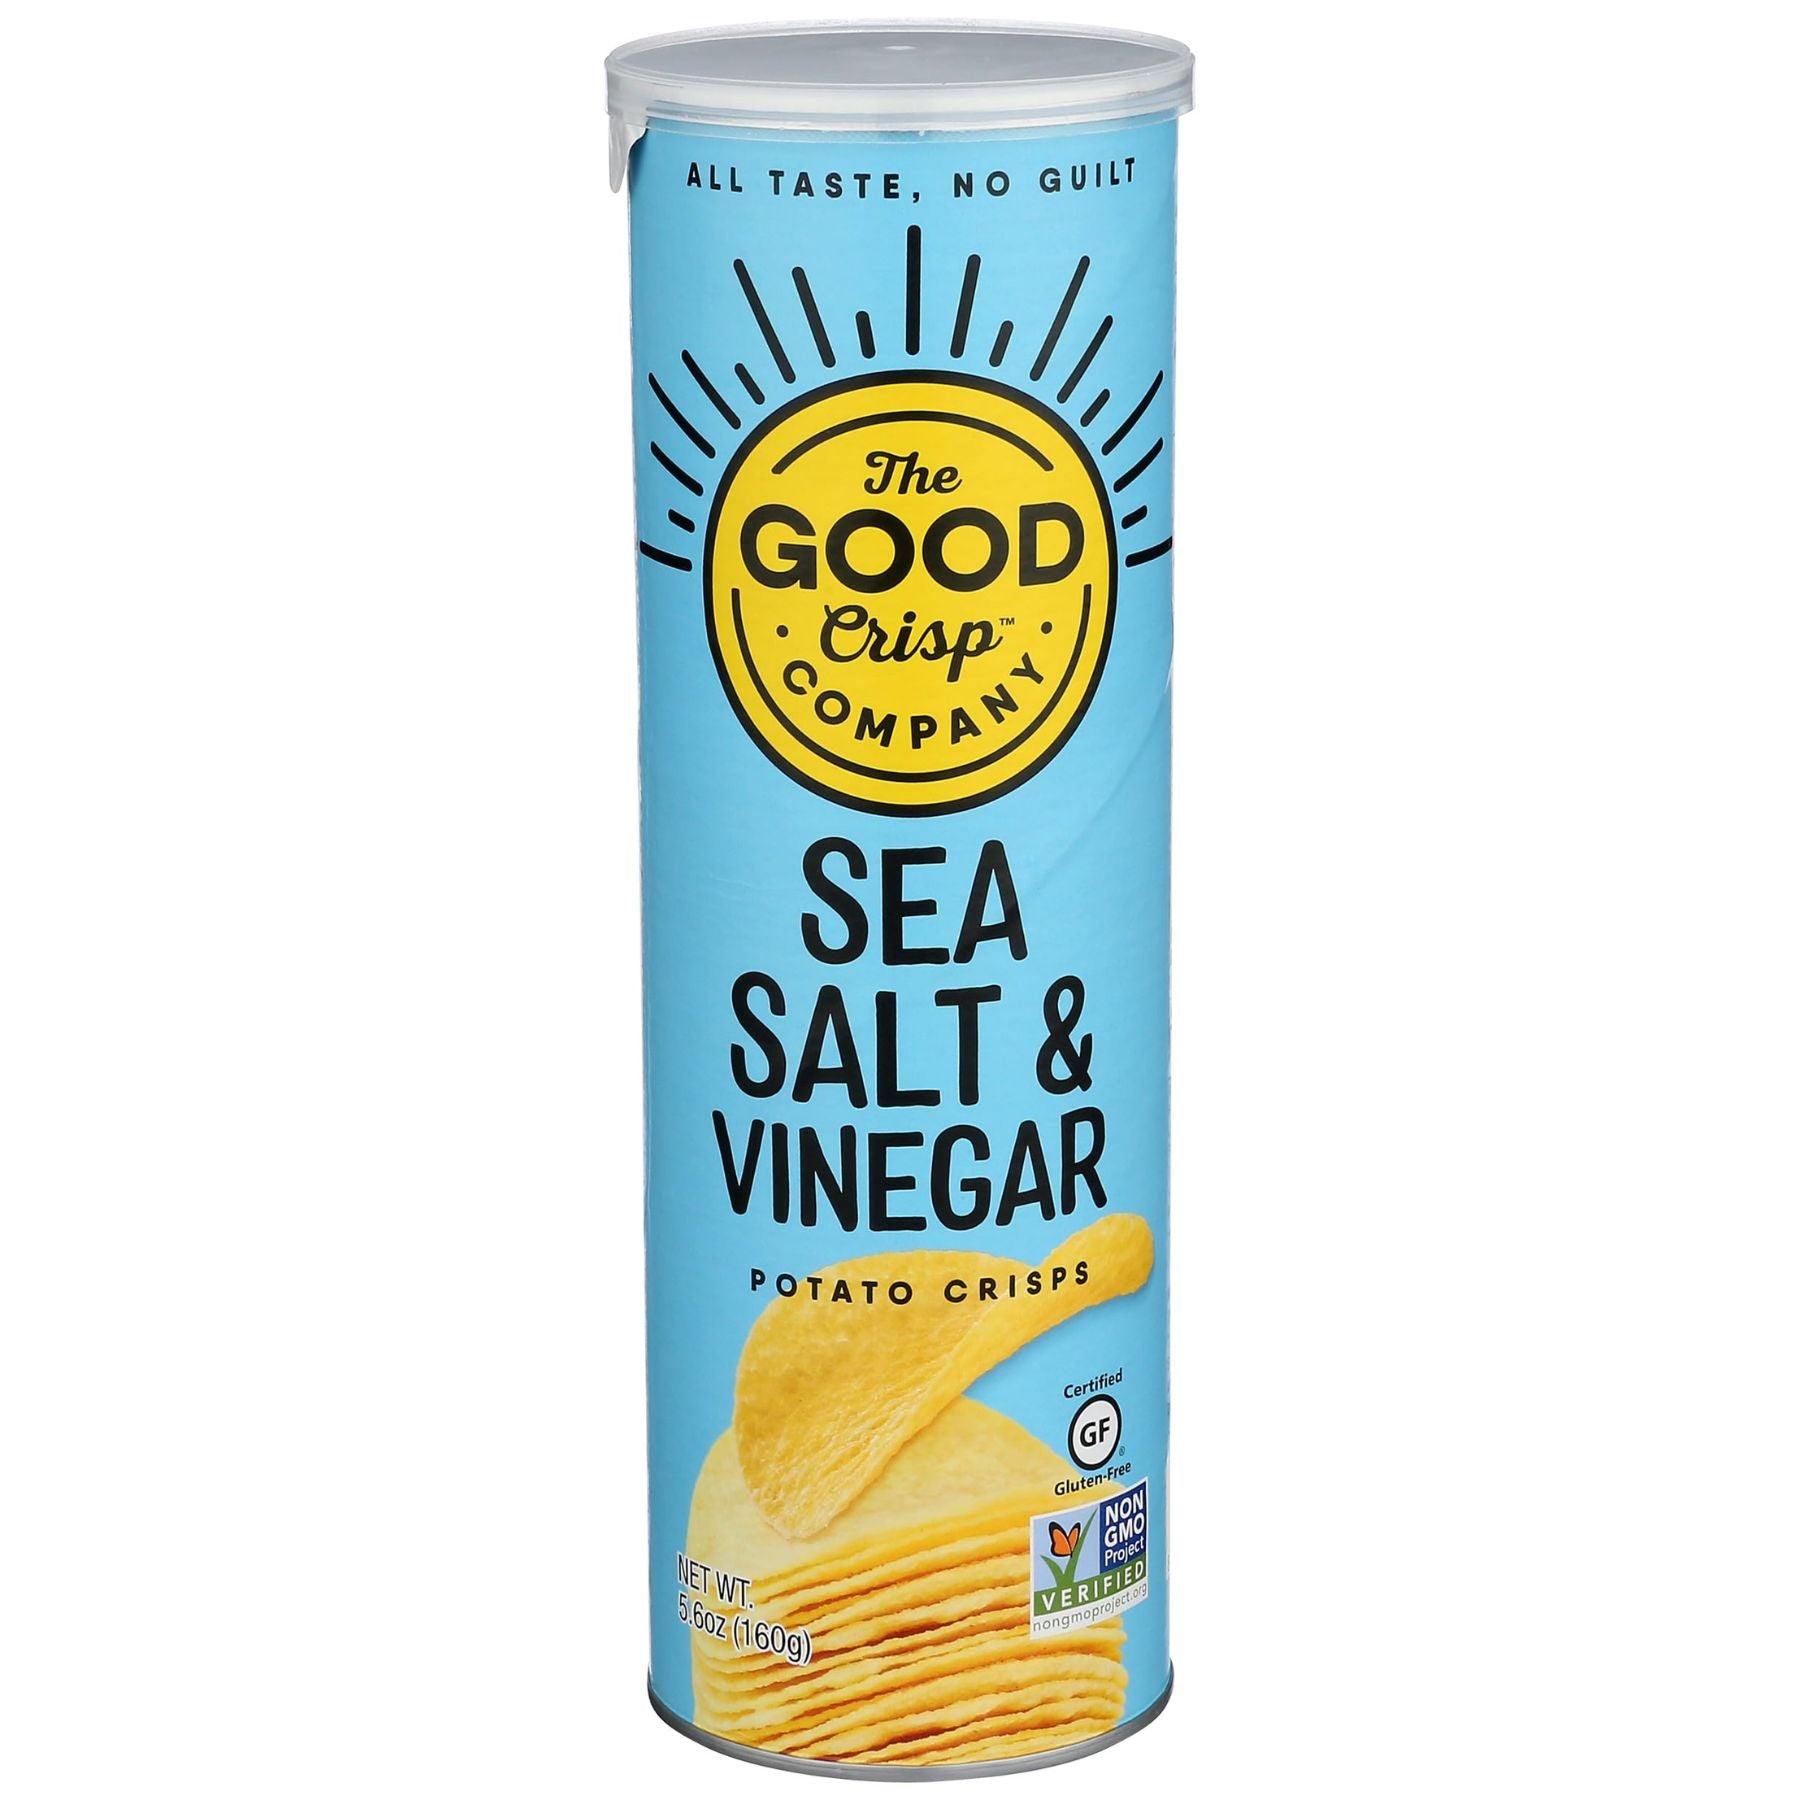 The Good Crisp Co. Potato Crisps - Sea Salt & Vinegar 160g